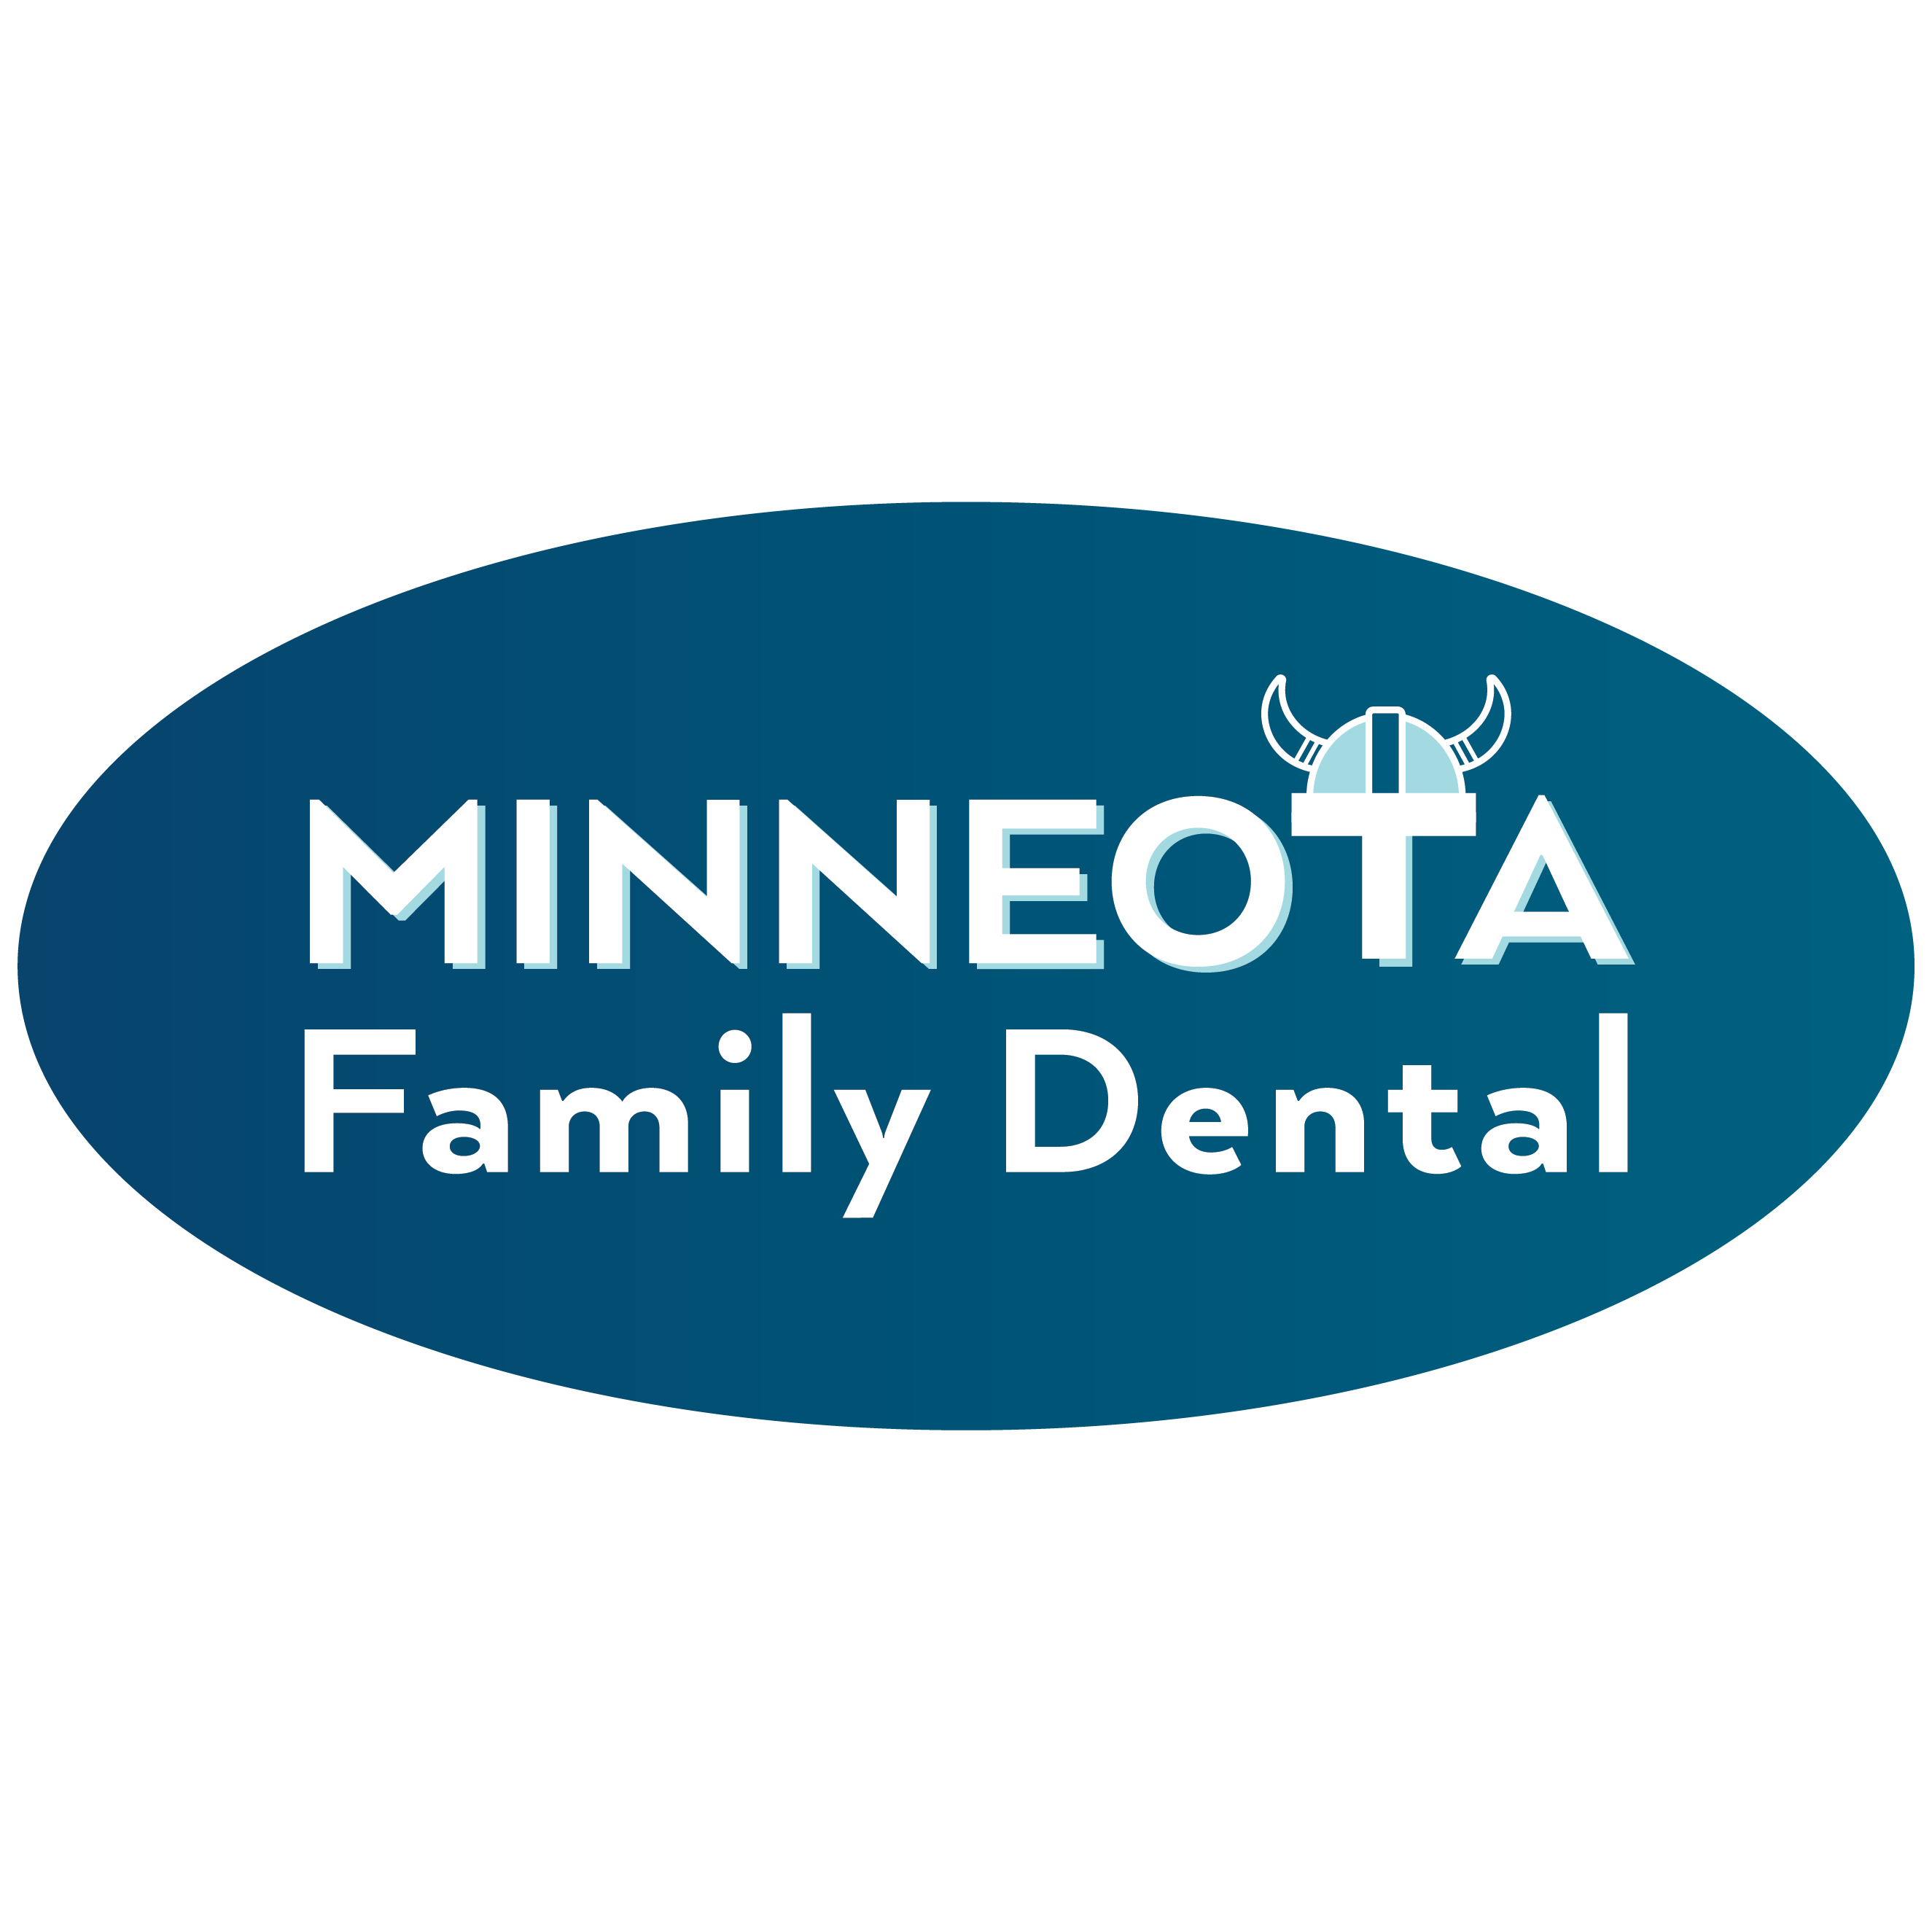 Minneota Family Dental